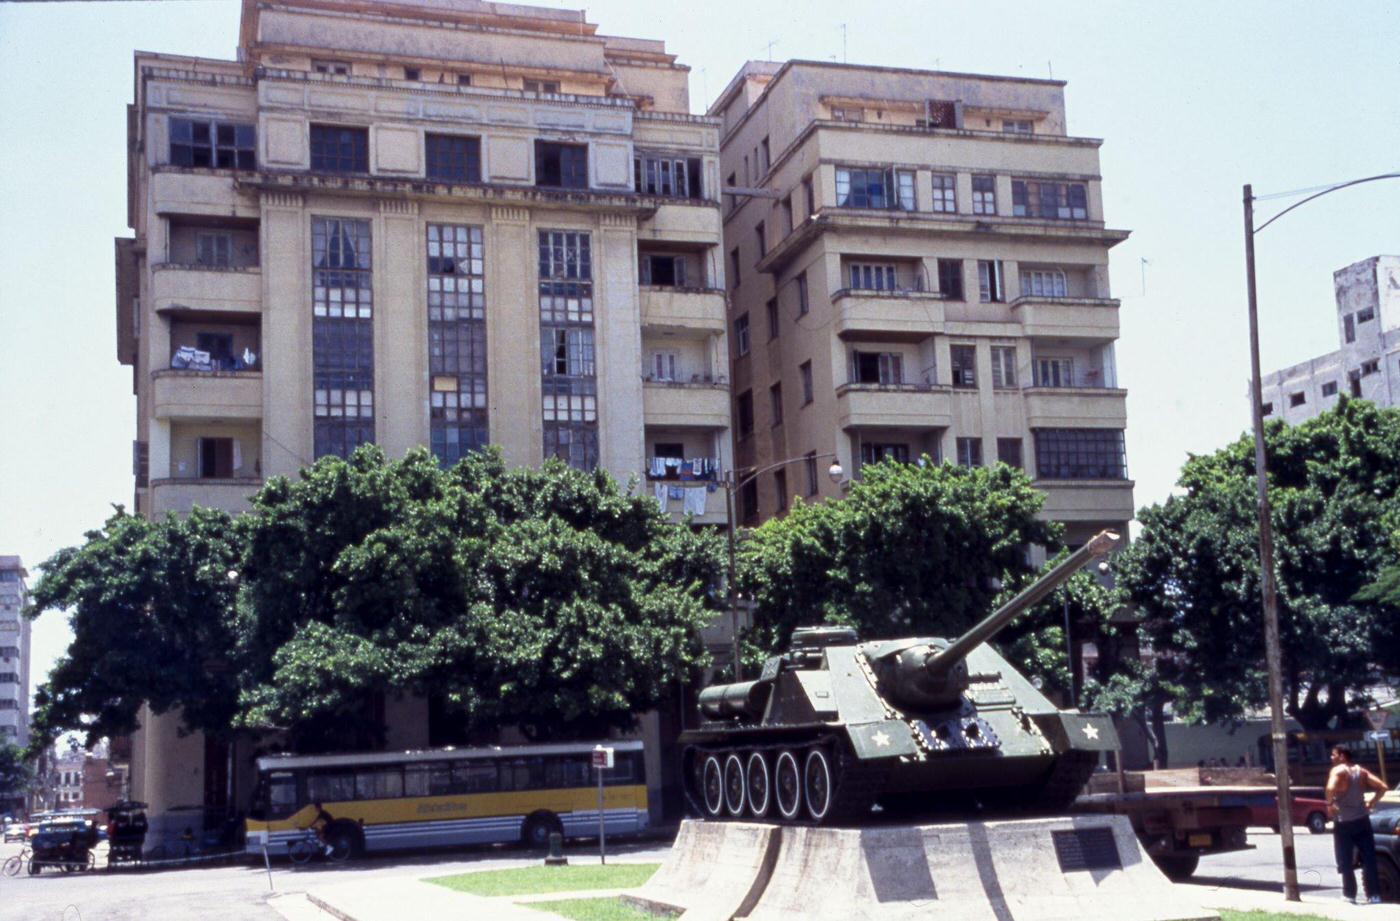 Buildings in Havana, Cuba, June 1999